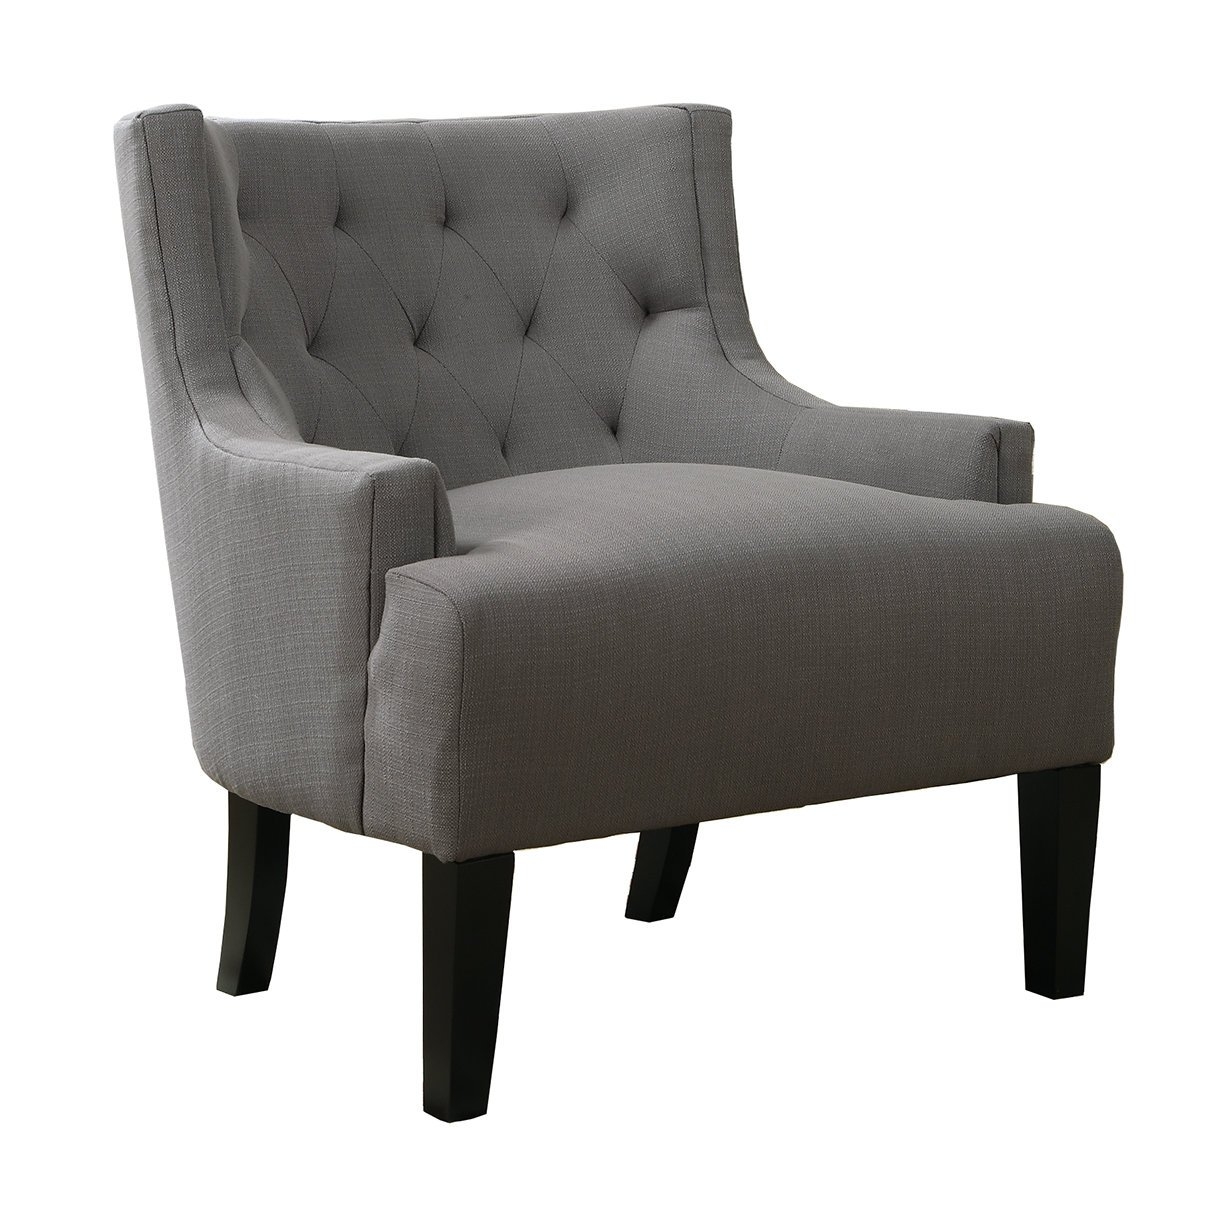 Poundex Bobkona Ansley Microfiber Arm Chair - Grey - Image 0